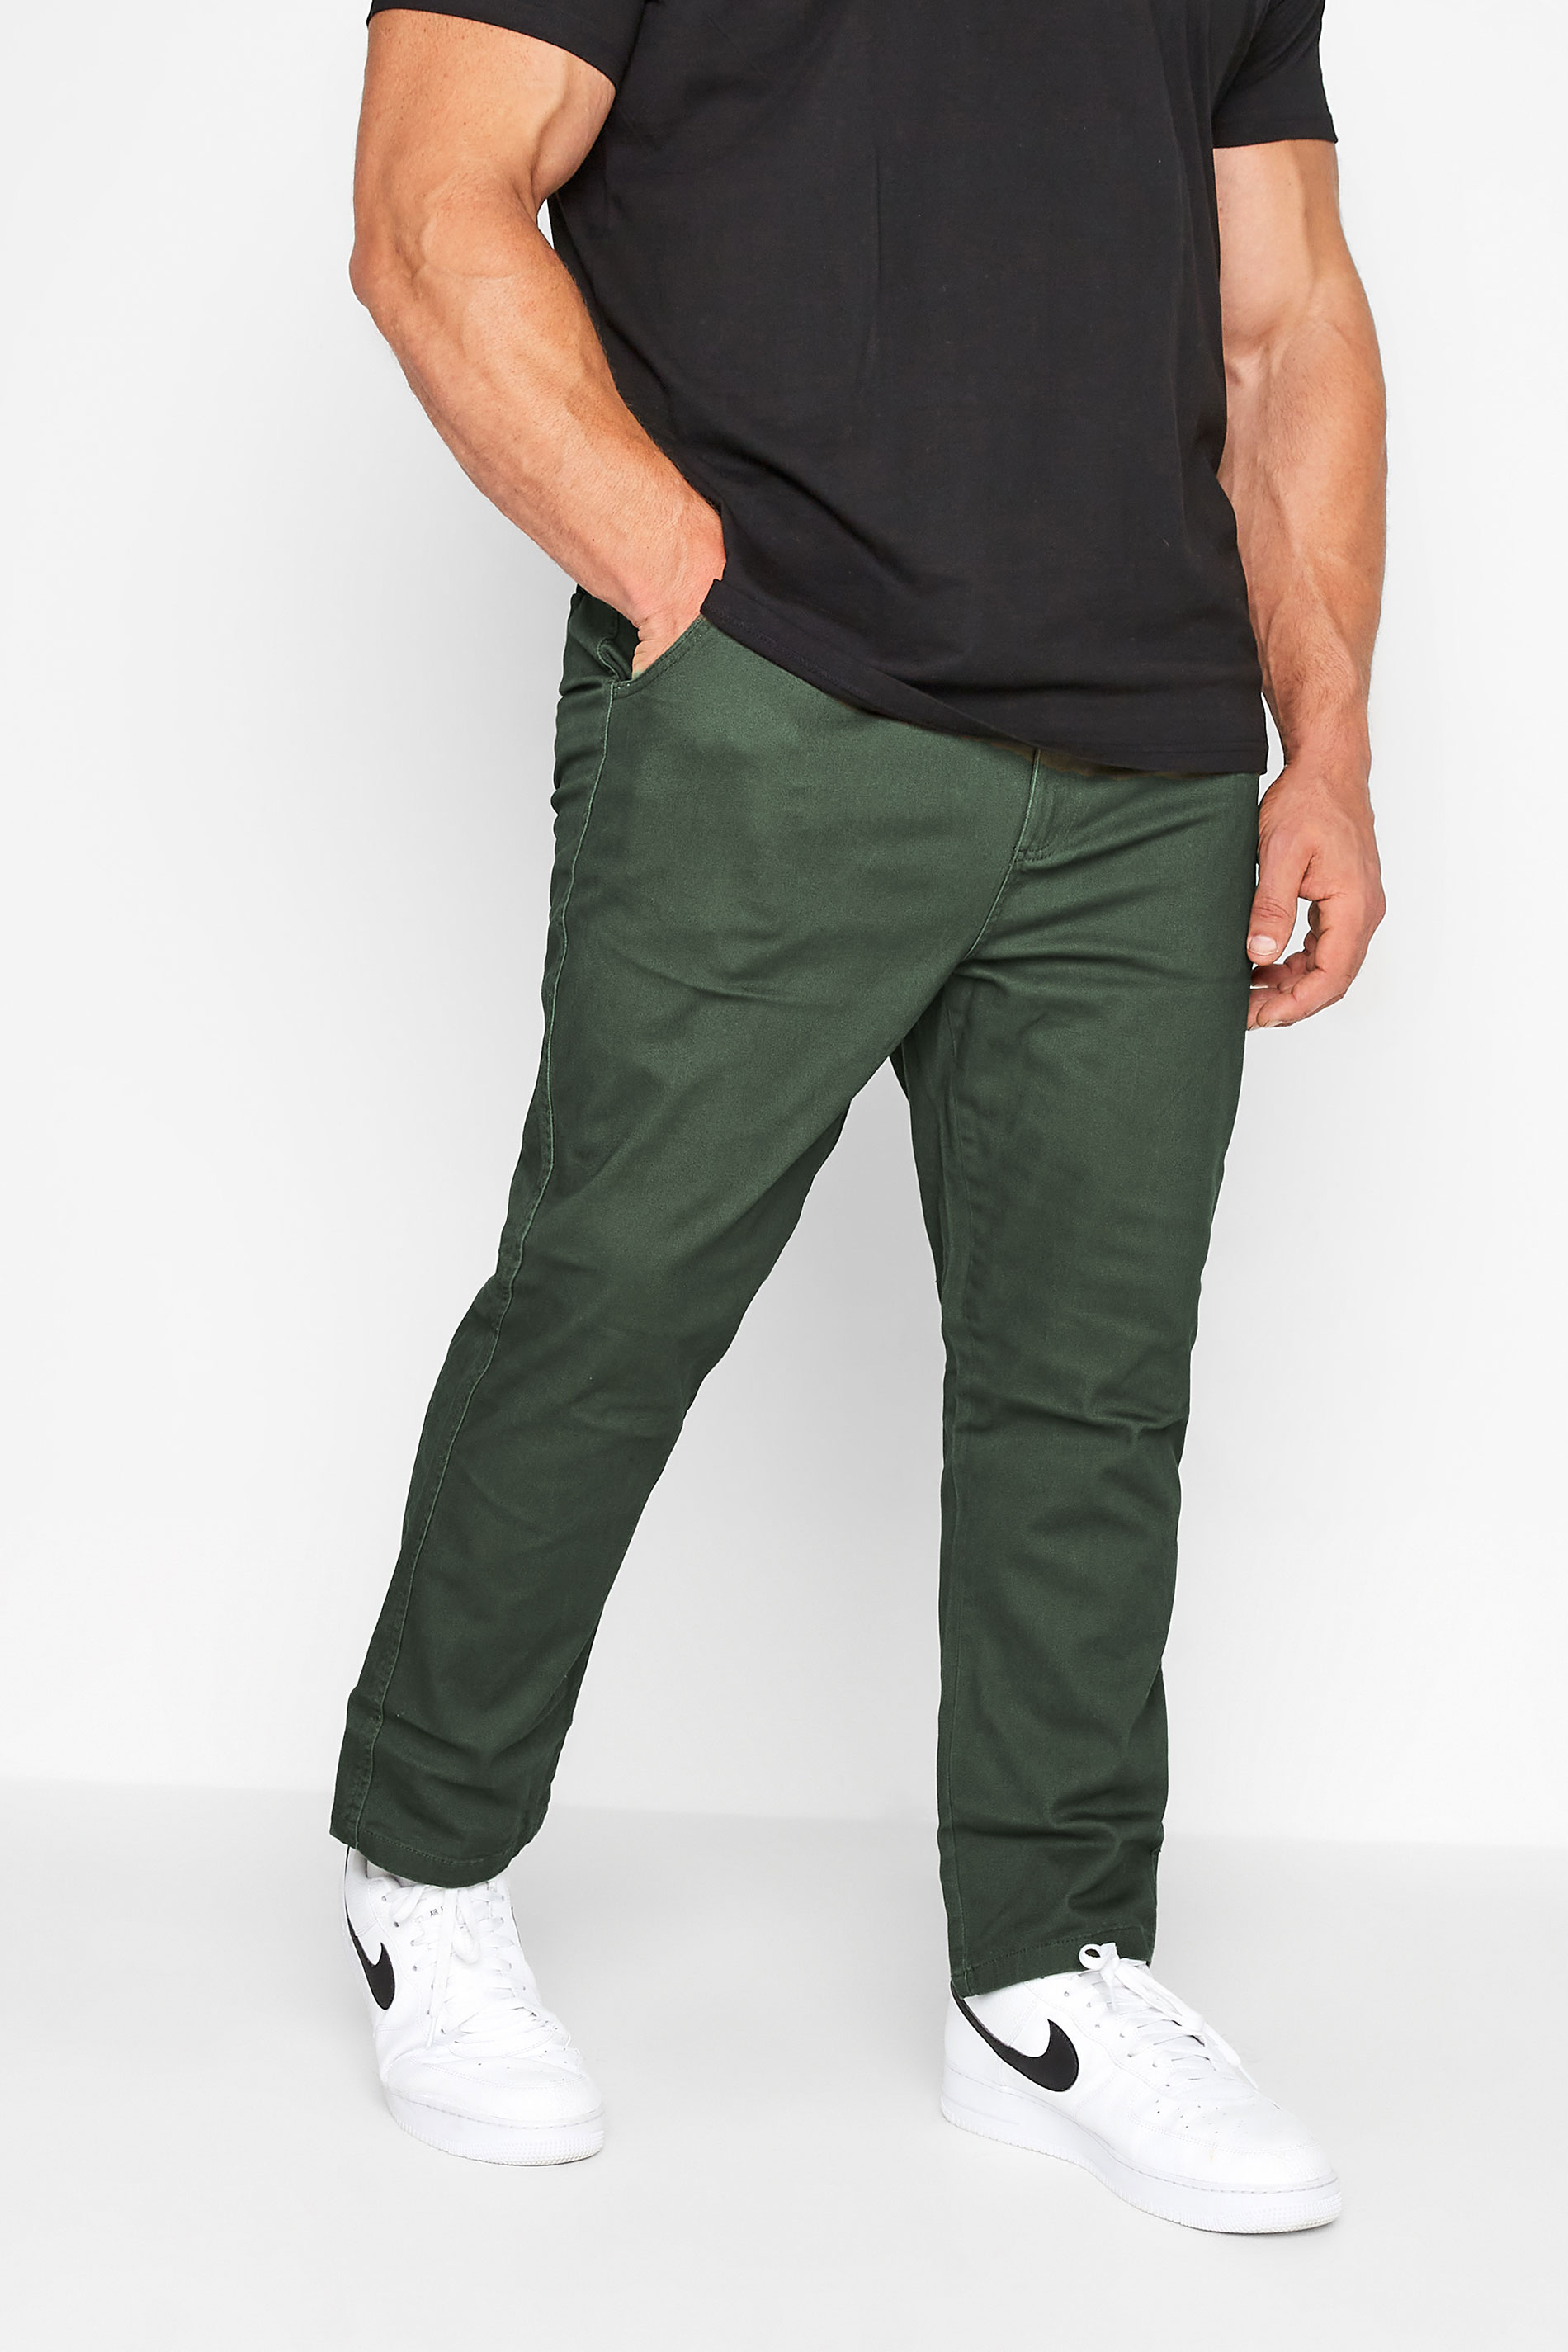 Image of Inside Leg Size 30", Waist Size 40 Mens Kam Big & Tall Khaki Green Chino Trousers Big & Tall